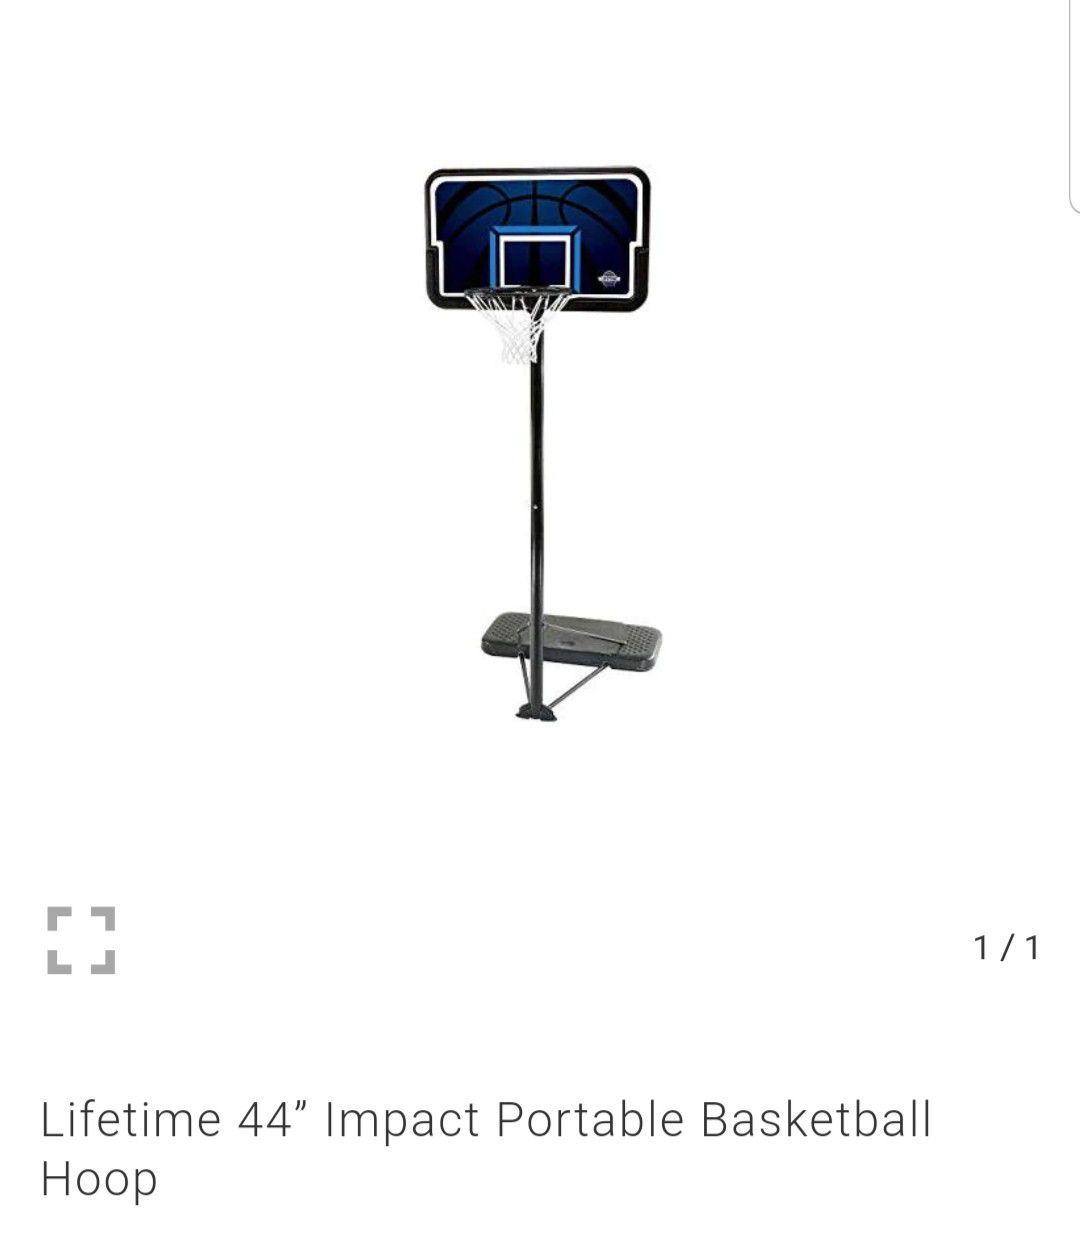 Lifetime 44" Impact Portable Basketball Hoop - BRAND NEW IN BOX